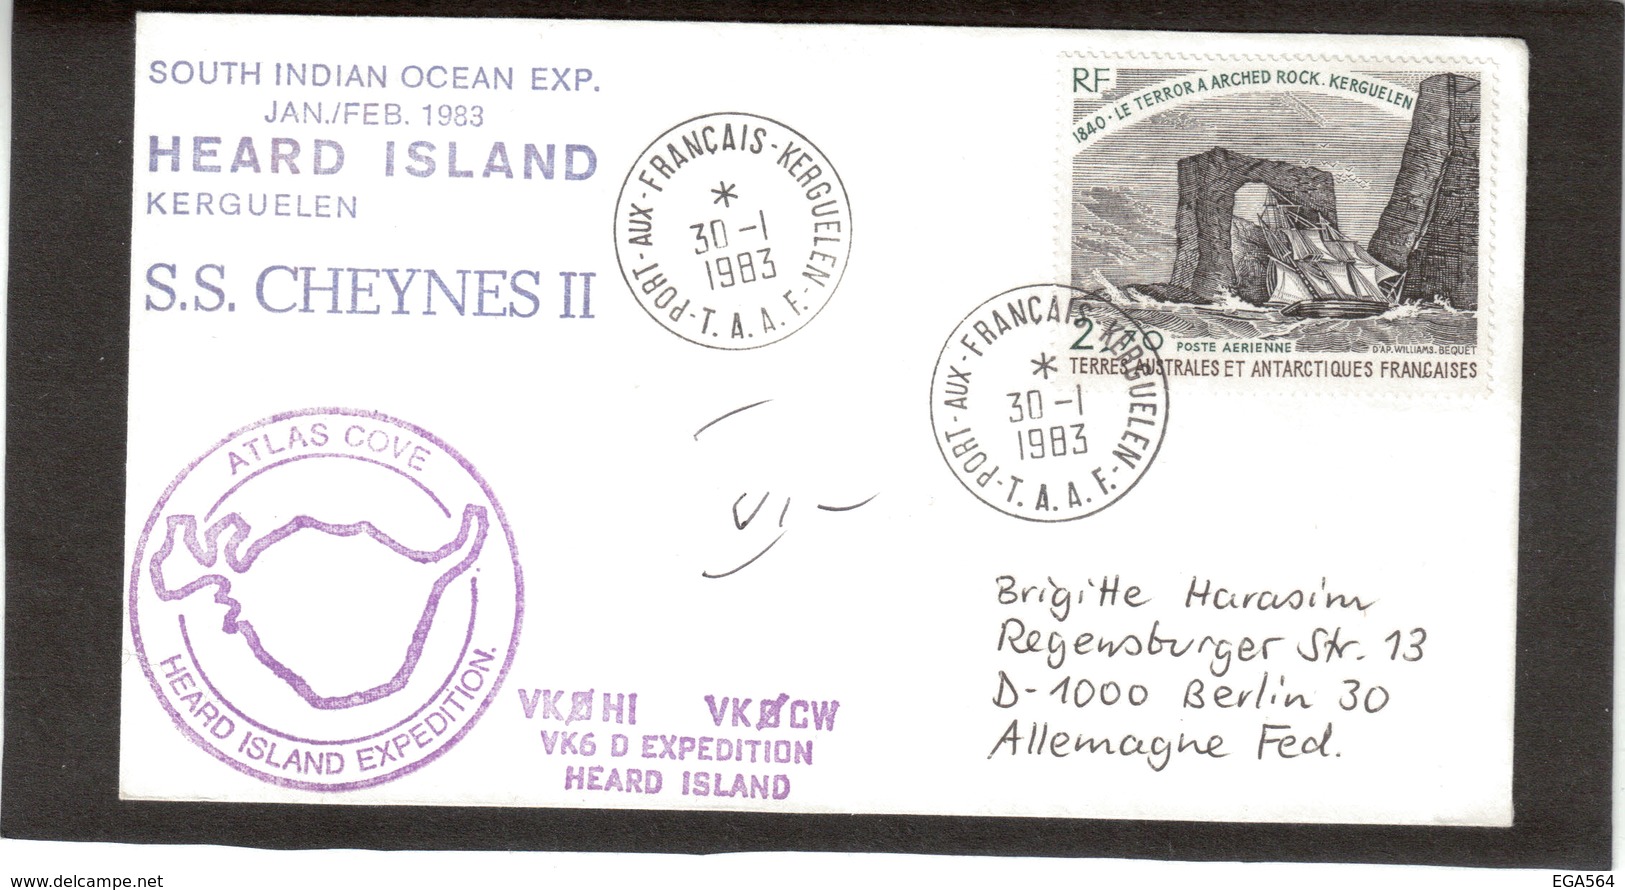 E45 - PA59 - 30.1.1983 KERGUELEN - S.S. CHEYNES II - HEARD ISLAND EXPEDITION - Transit ADELAÏDE 9 MARS 1983. - Lettres & Documents